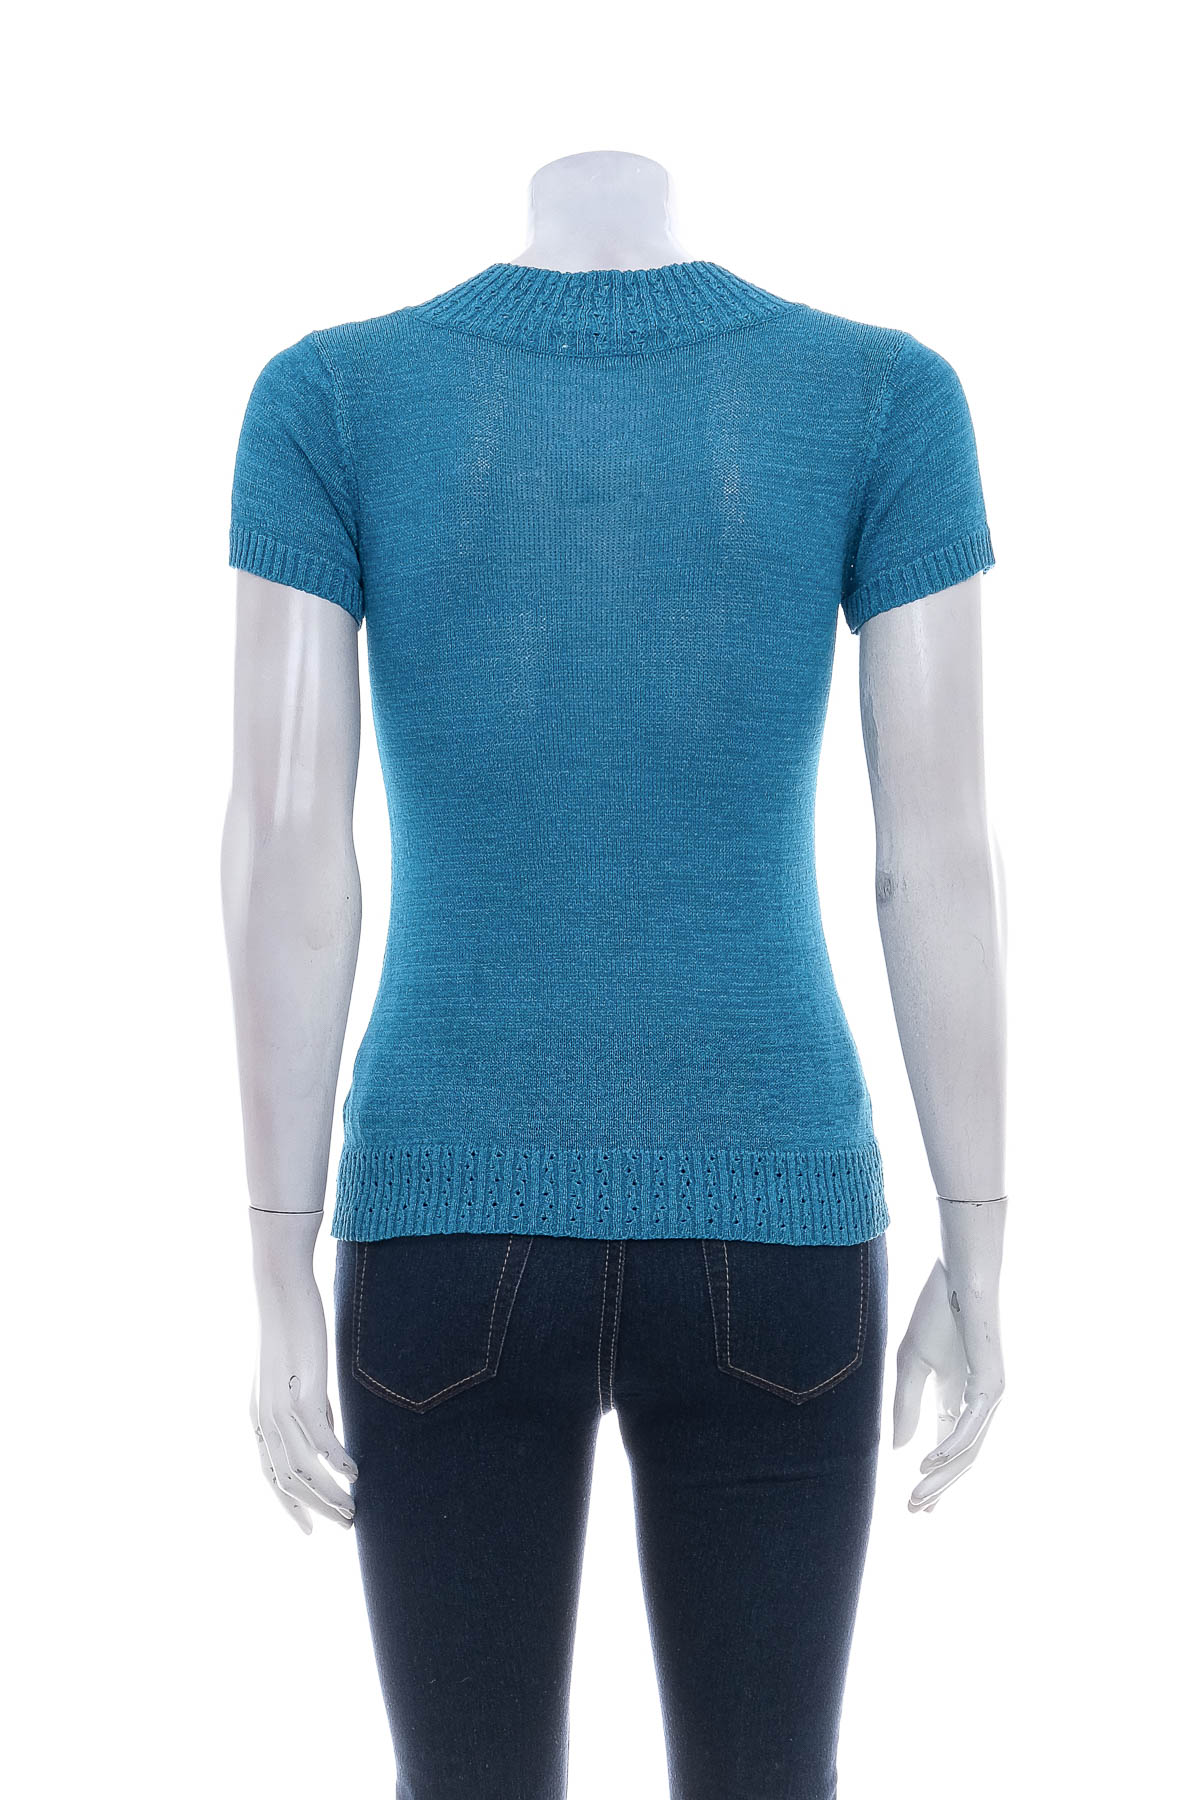 Women's sweater - Carducci - 1